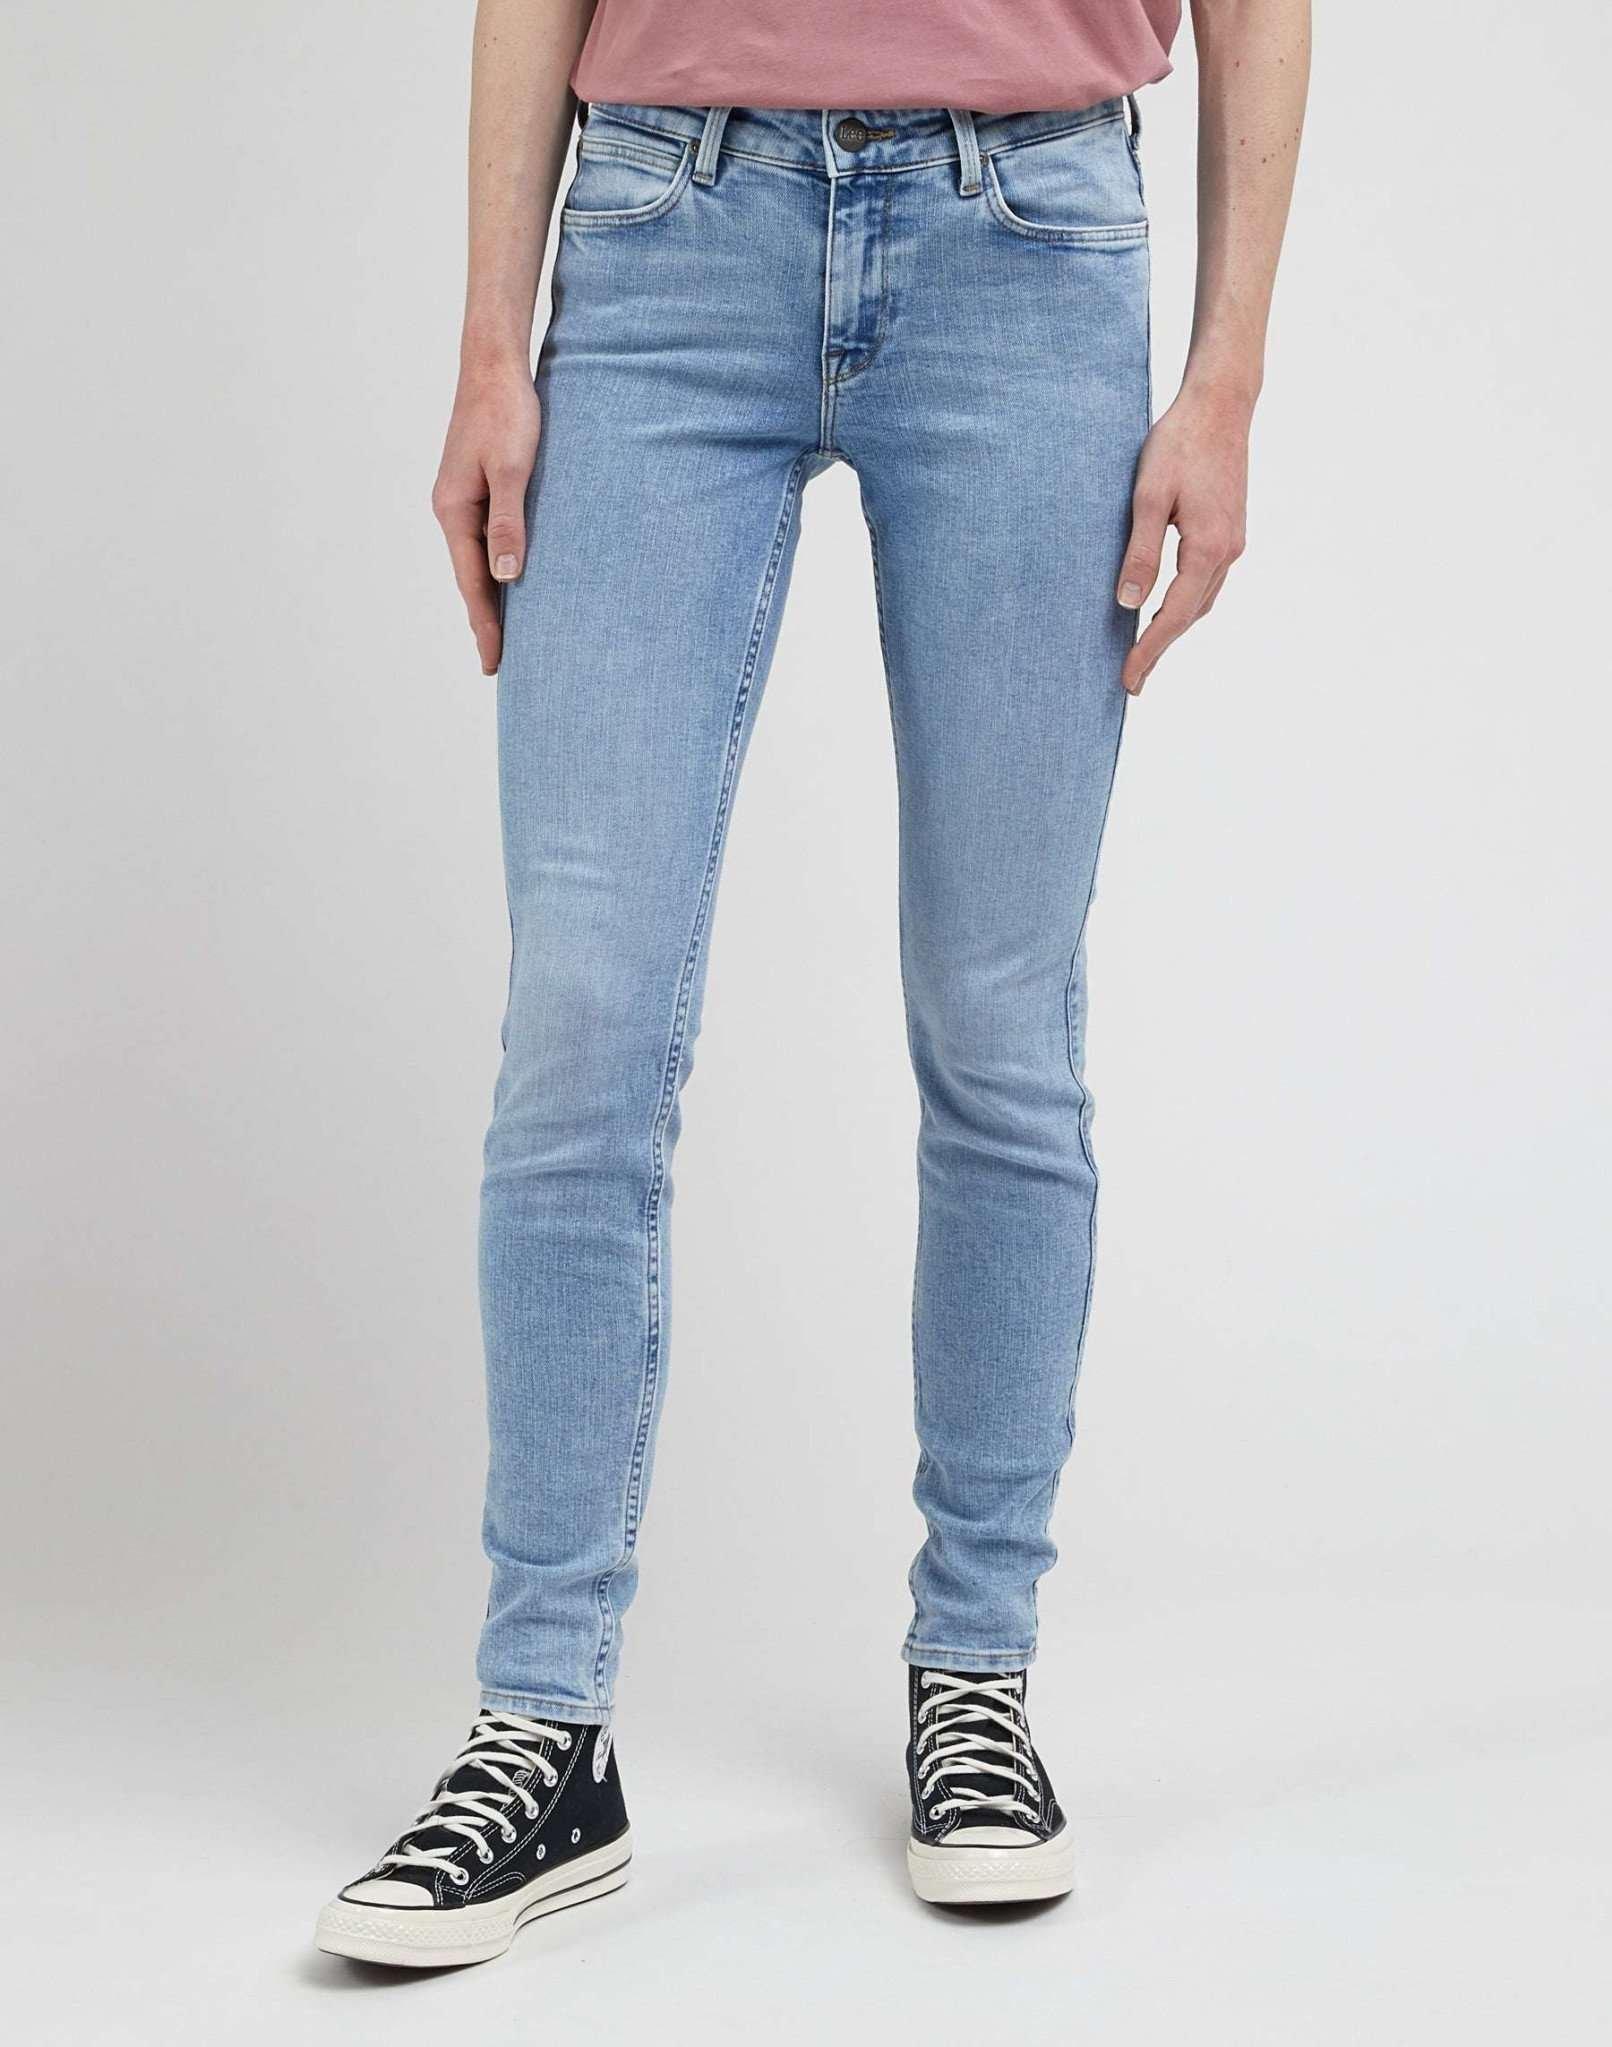 Jeans Skinny Fit Scarlett Damen Blau L33/W28 von Lee